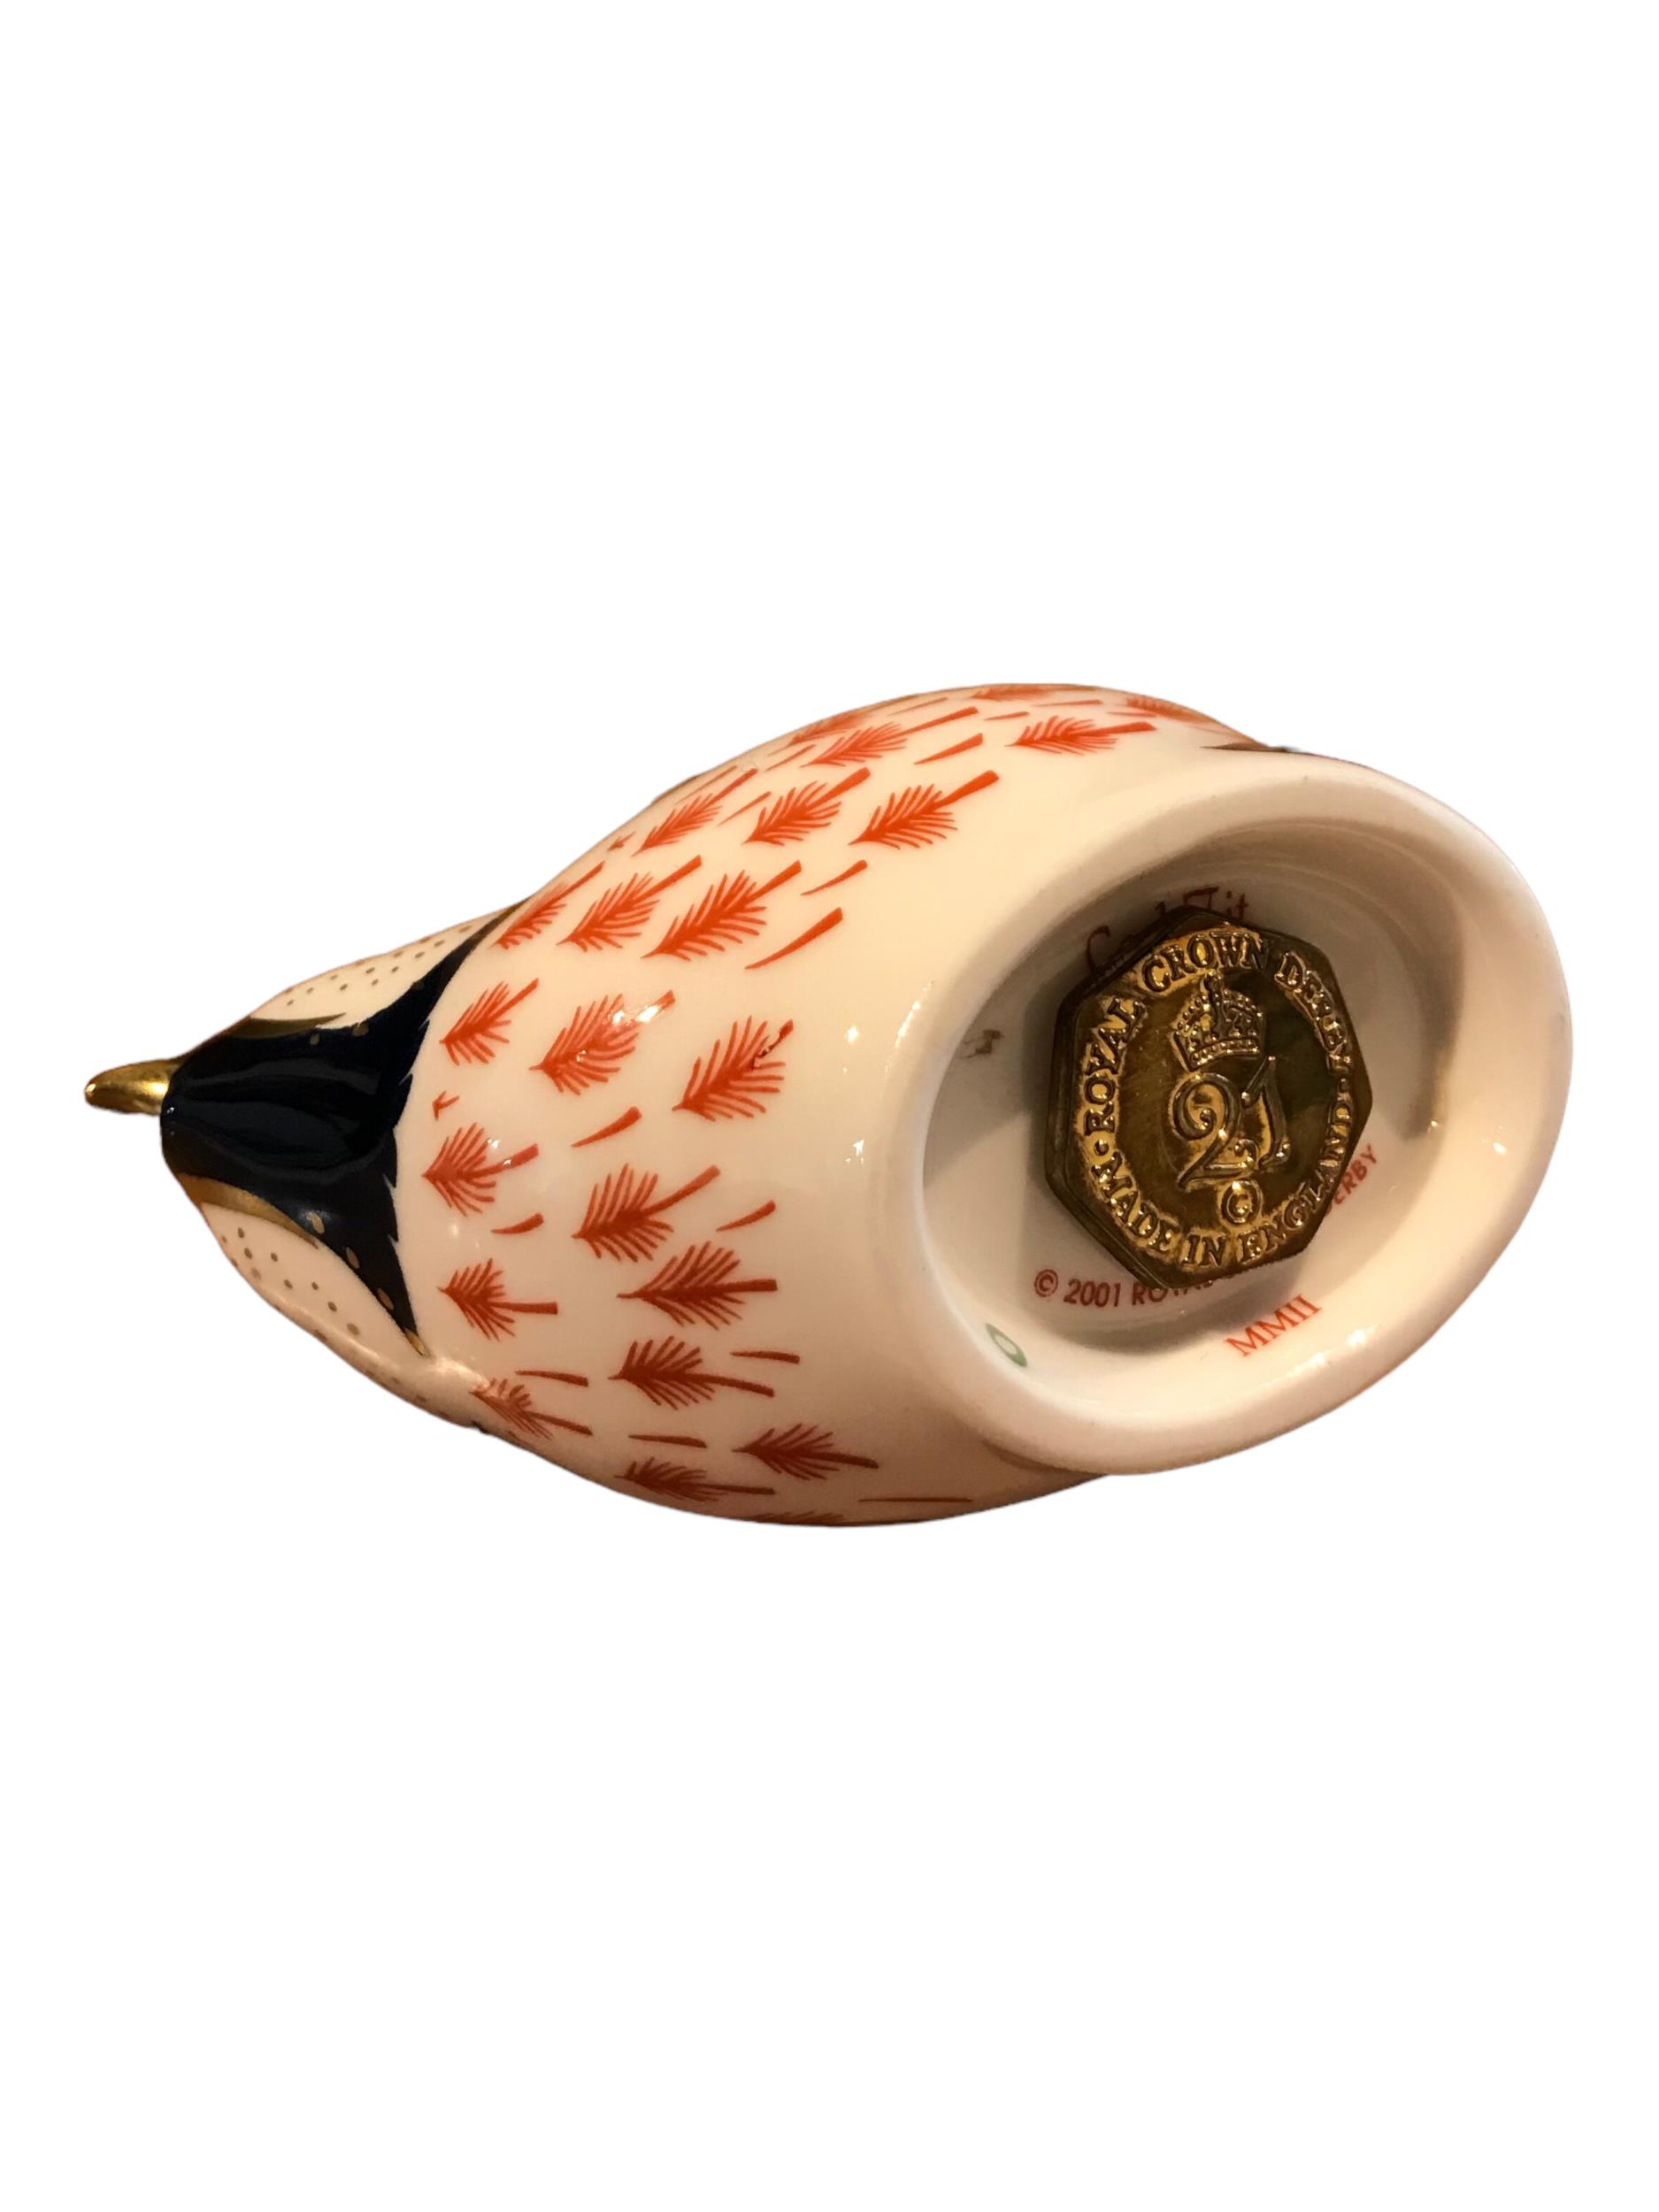 ROYAL CROWN DERBY, A GOLD BUTTONED COAL TIT BIRD In original box. (h 5cm x w 9.4cm x depth 4.5cm) - Image 2 of 2